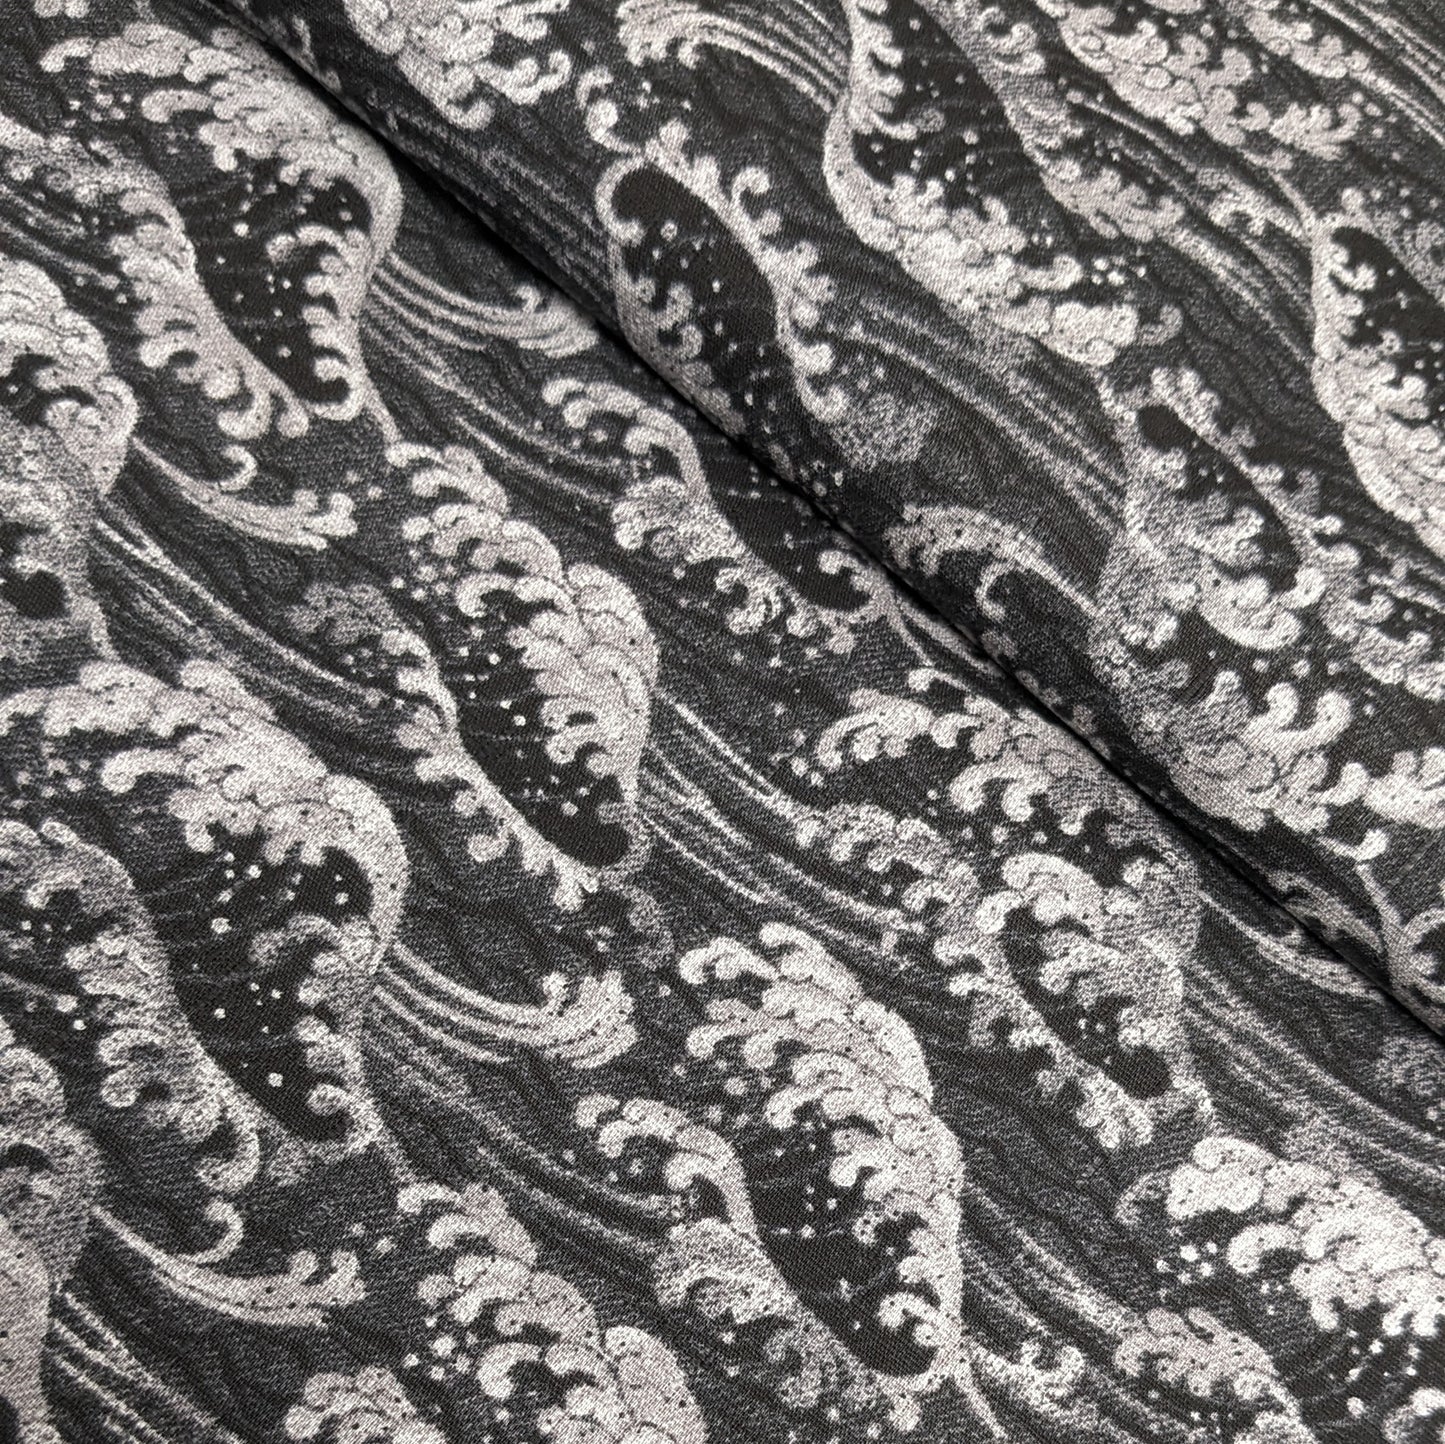 Japanese Fabric - Hokusai Style Waves - Black and Grey